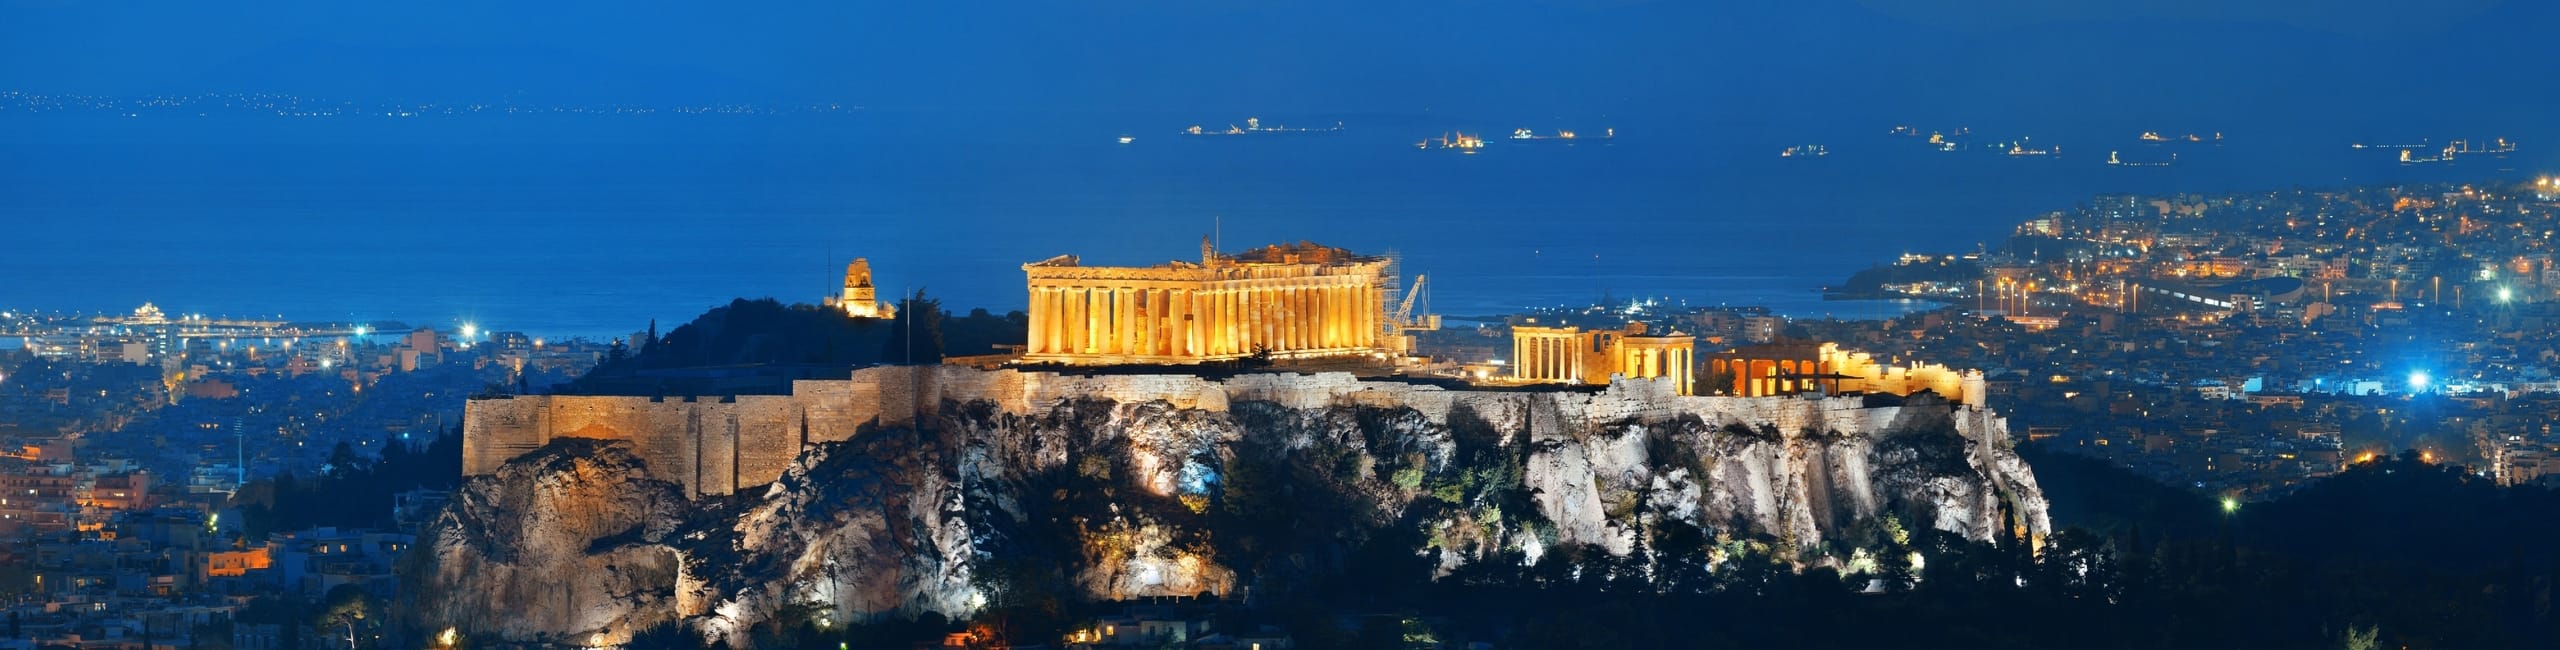 Acropolis - Greece